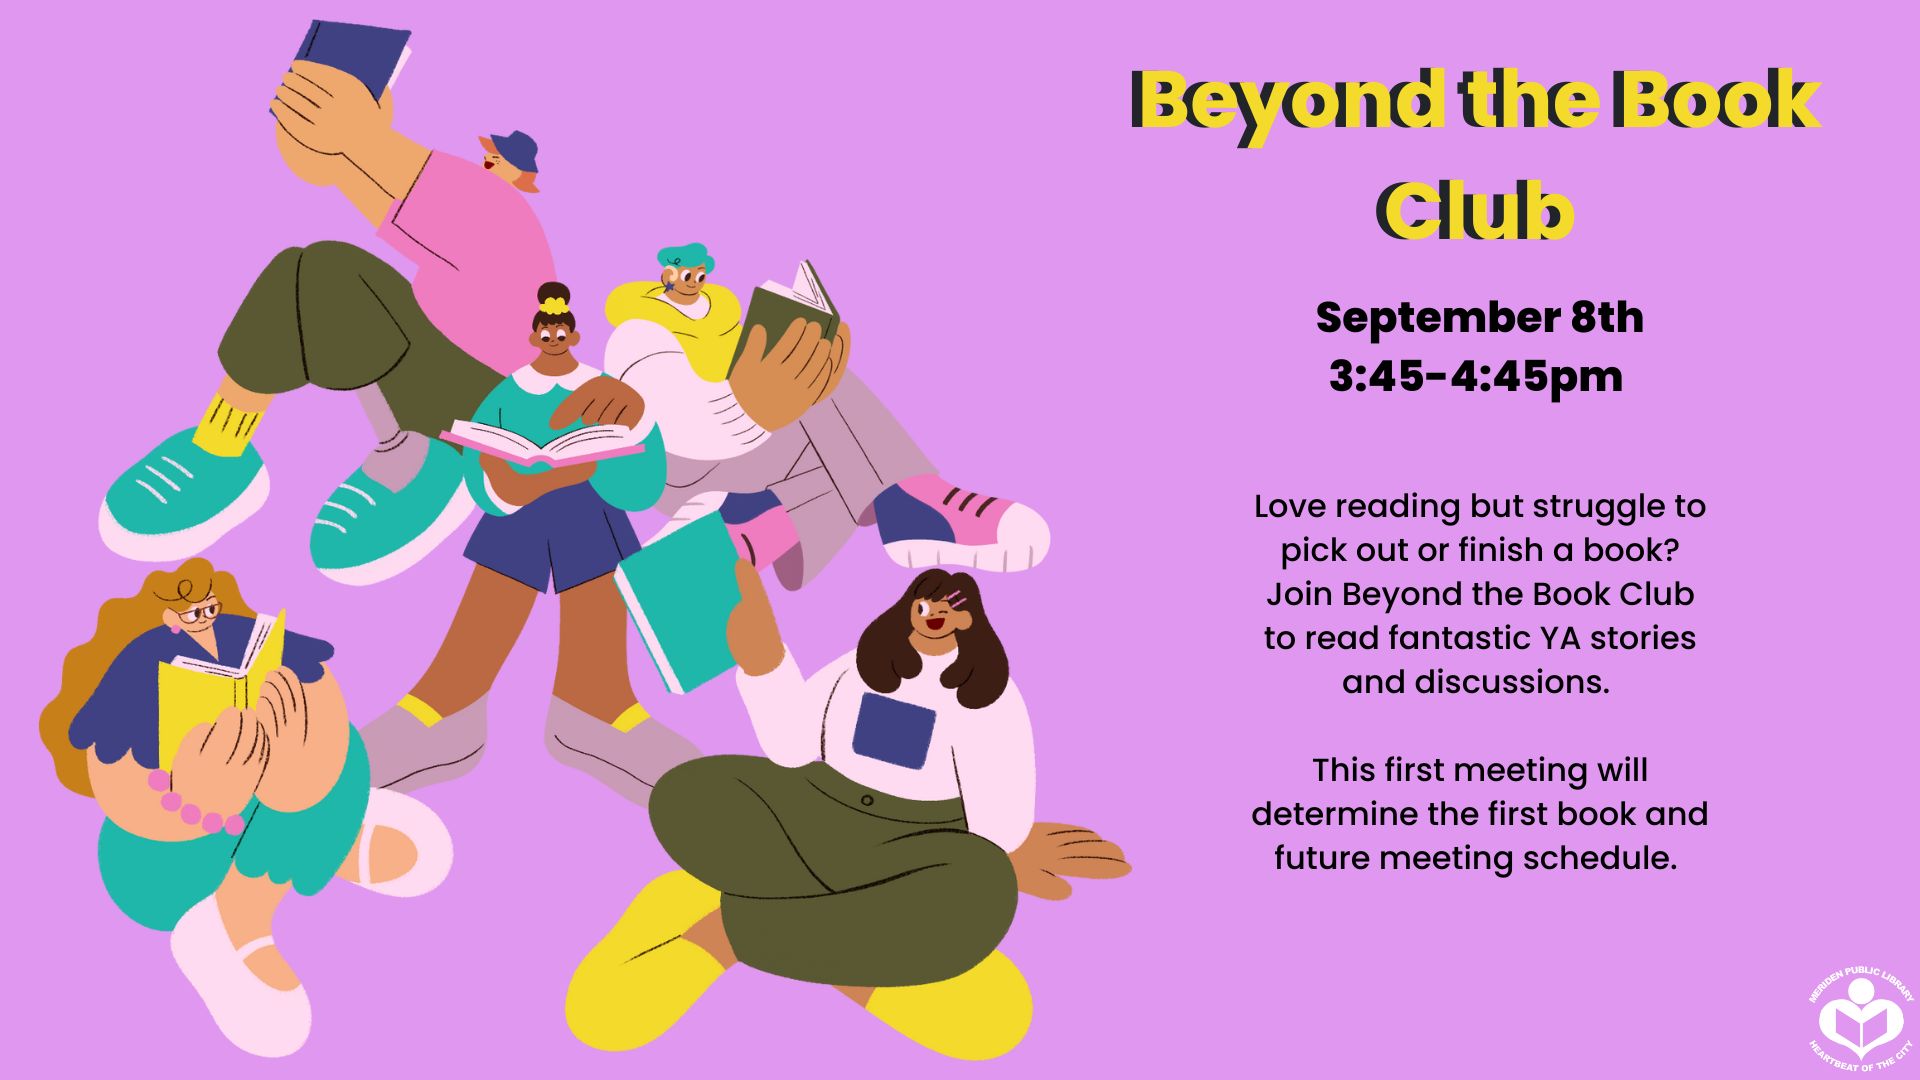 Beyond the Book Club